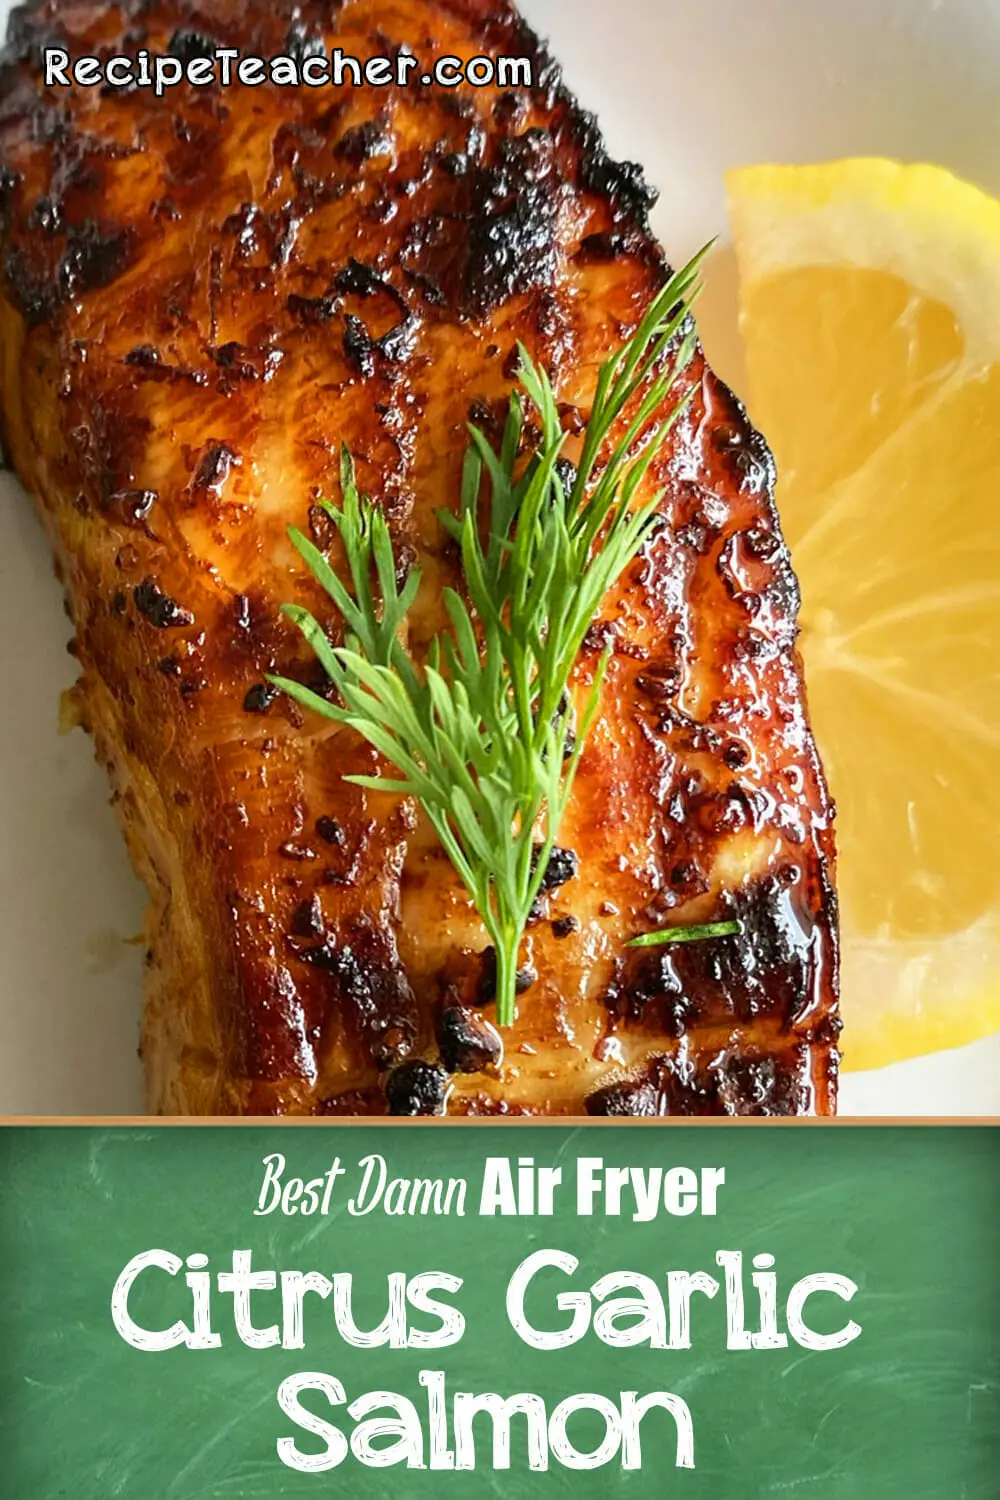 Recipe for air fryer citrus garlic salmon